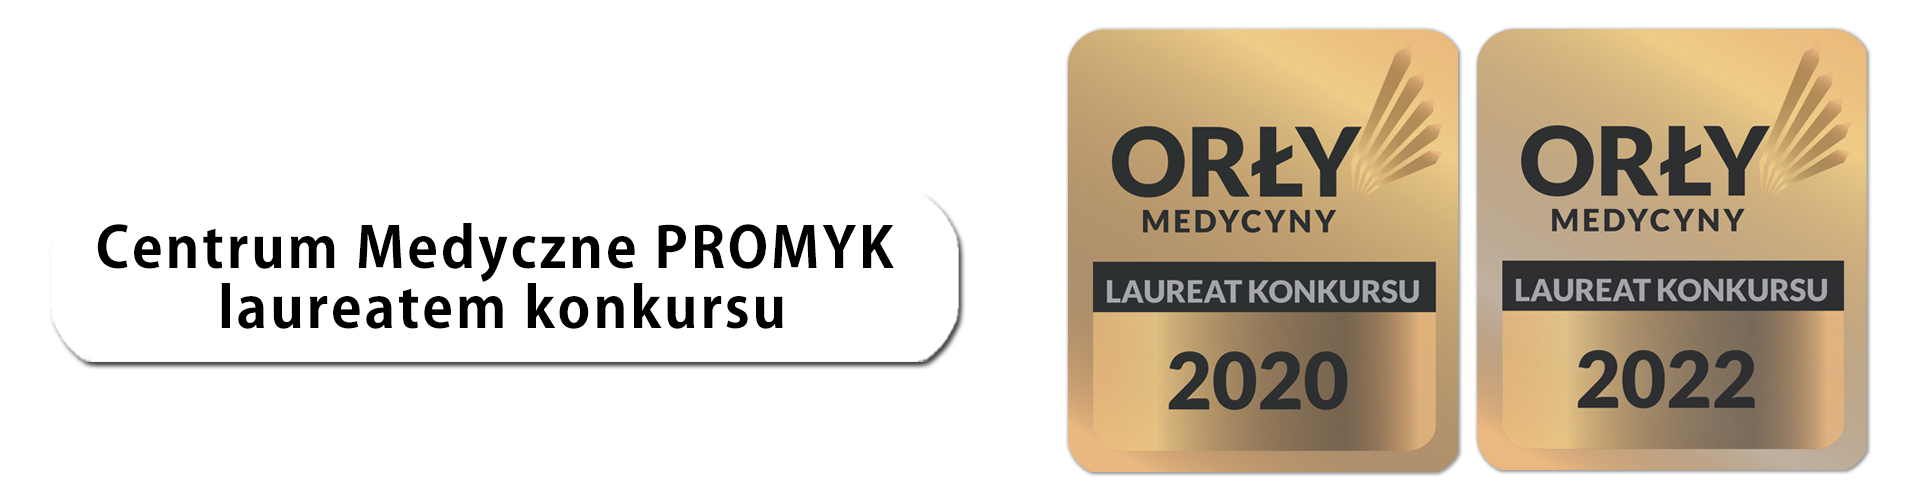 Laureat konkursu Orły Medycyny 2020 roku